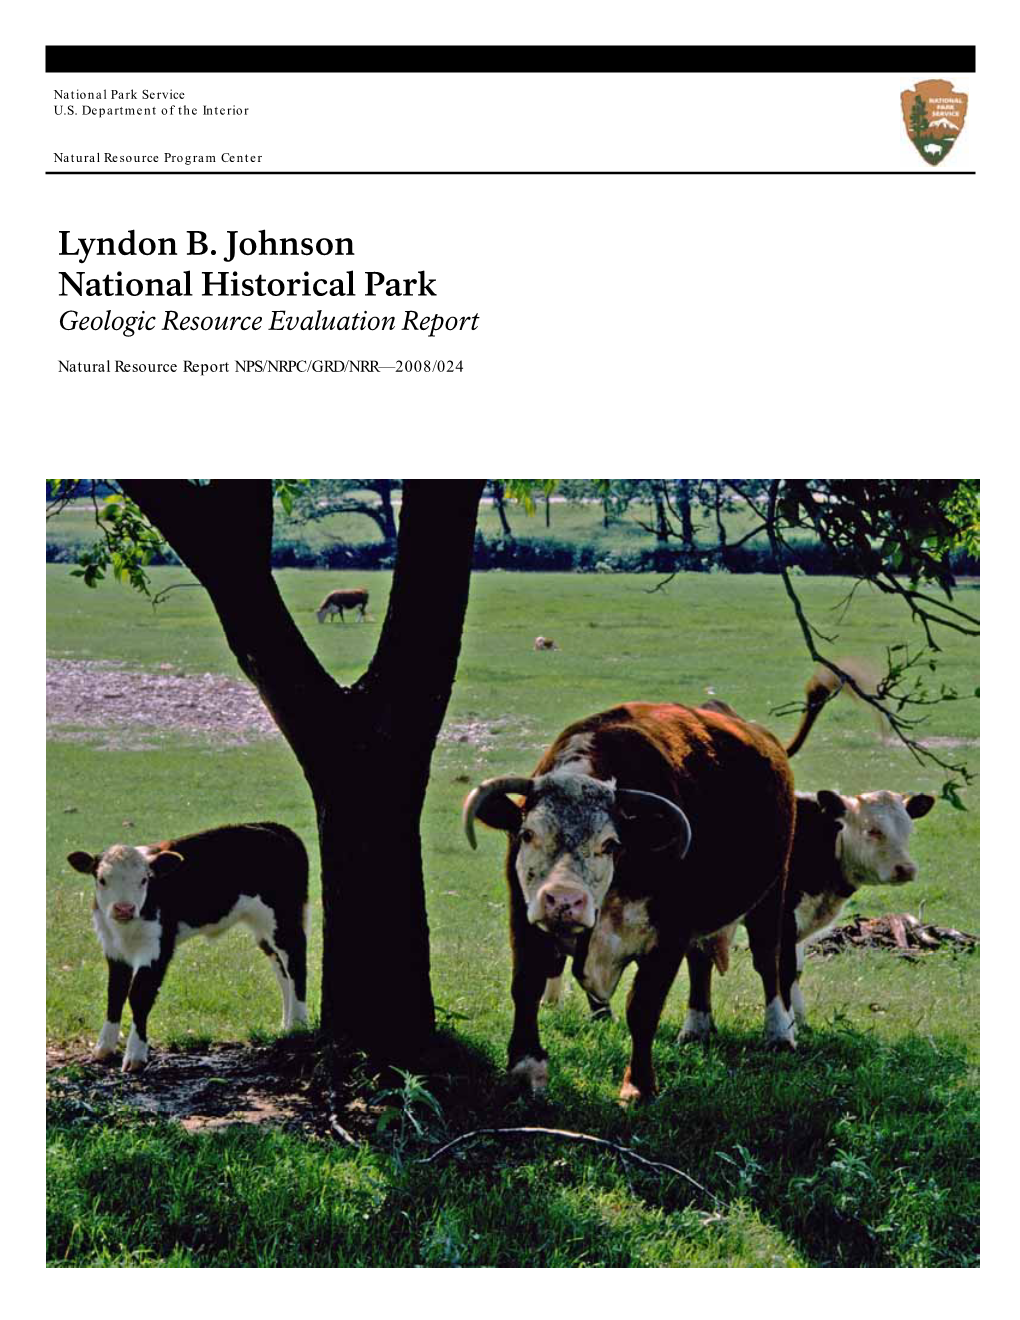 Geologic Resource Evaluation Report, Lyndon B. Johnson